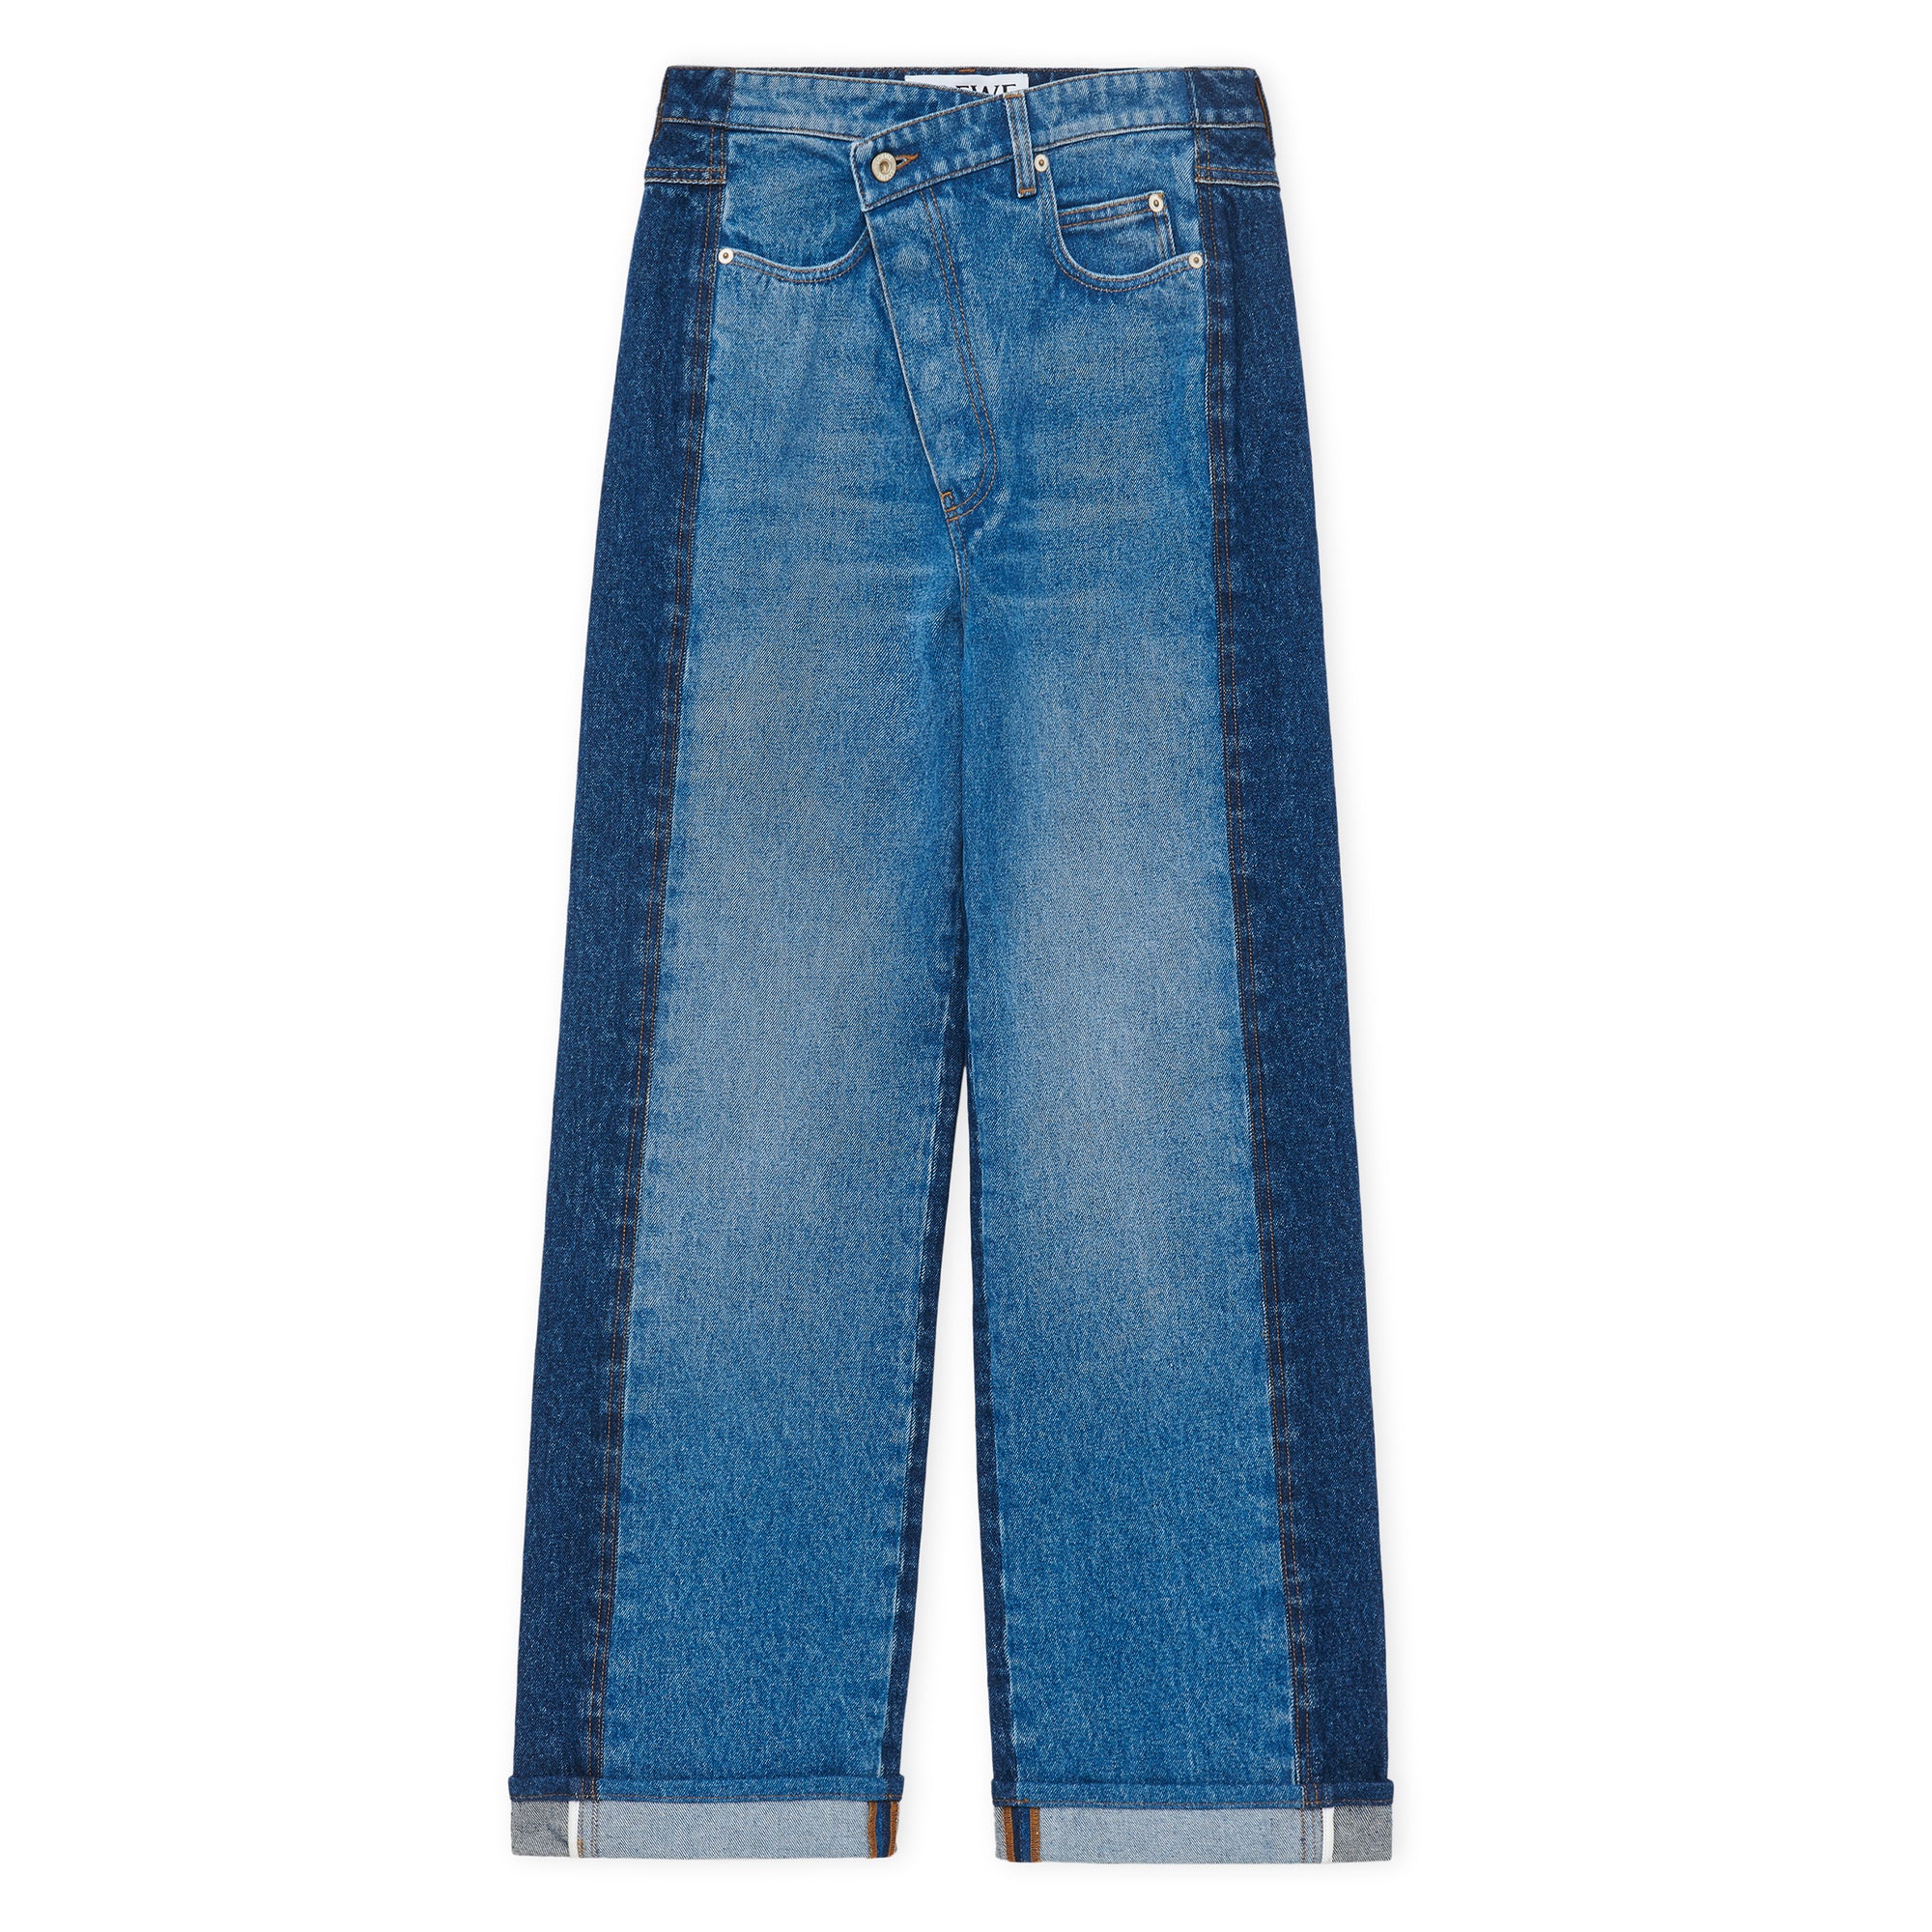 Loewe - Women’s Deconstructed Jeans - (Denim Blue) view 1